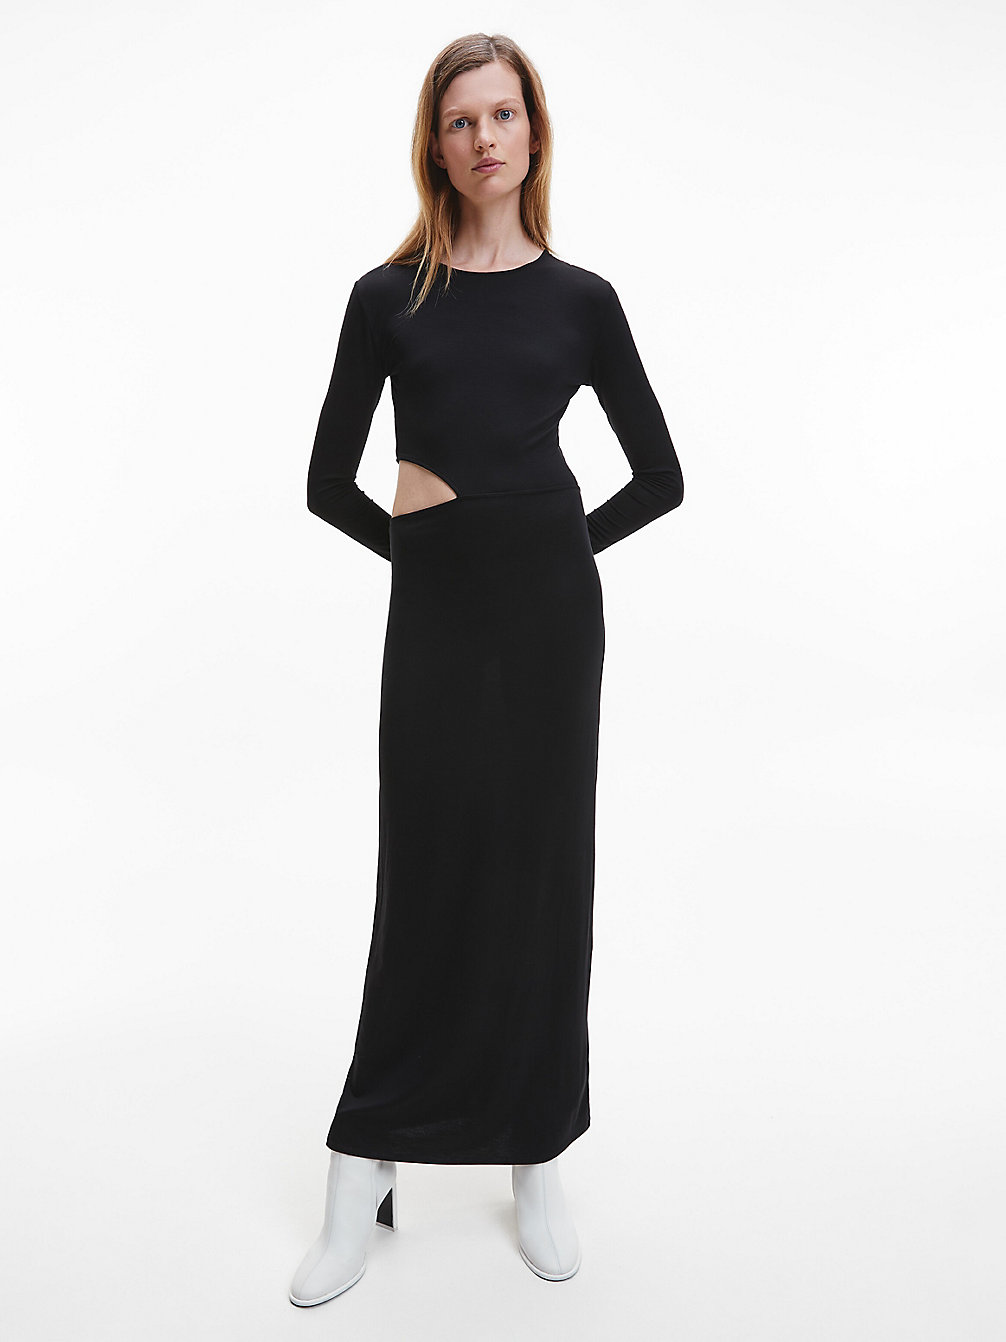 CK BLACK Cut Out Detail Bodycon Dress undefined women Calvin Klein